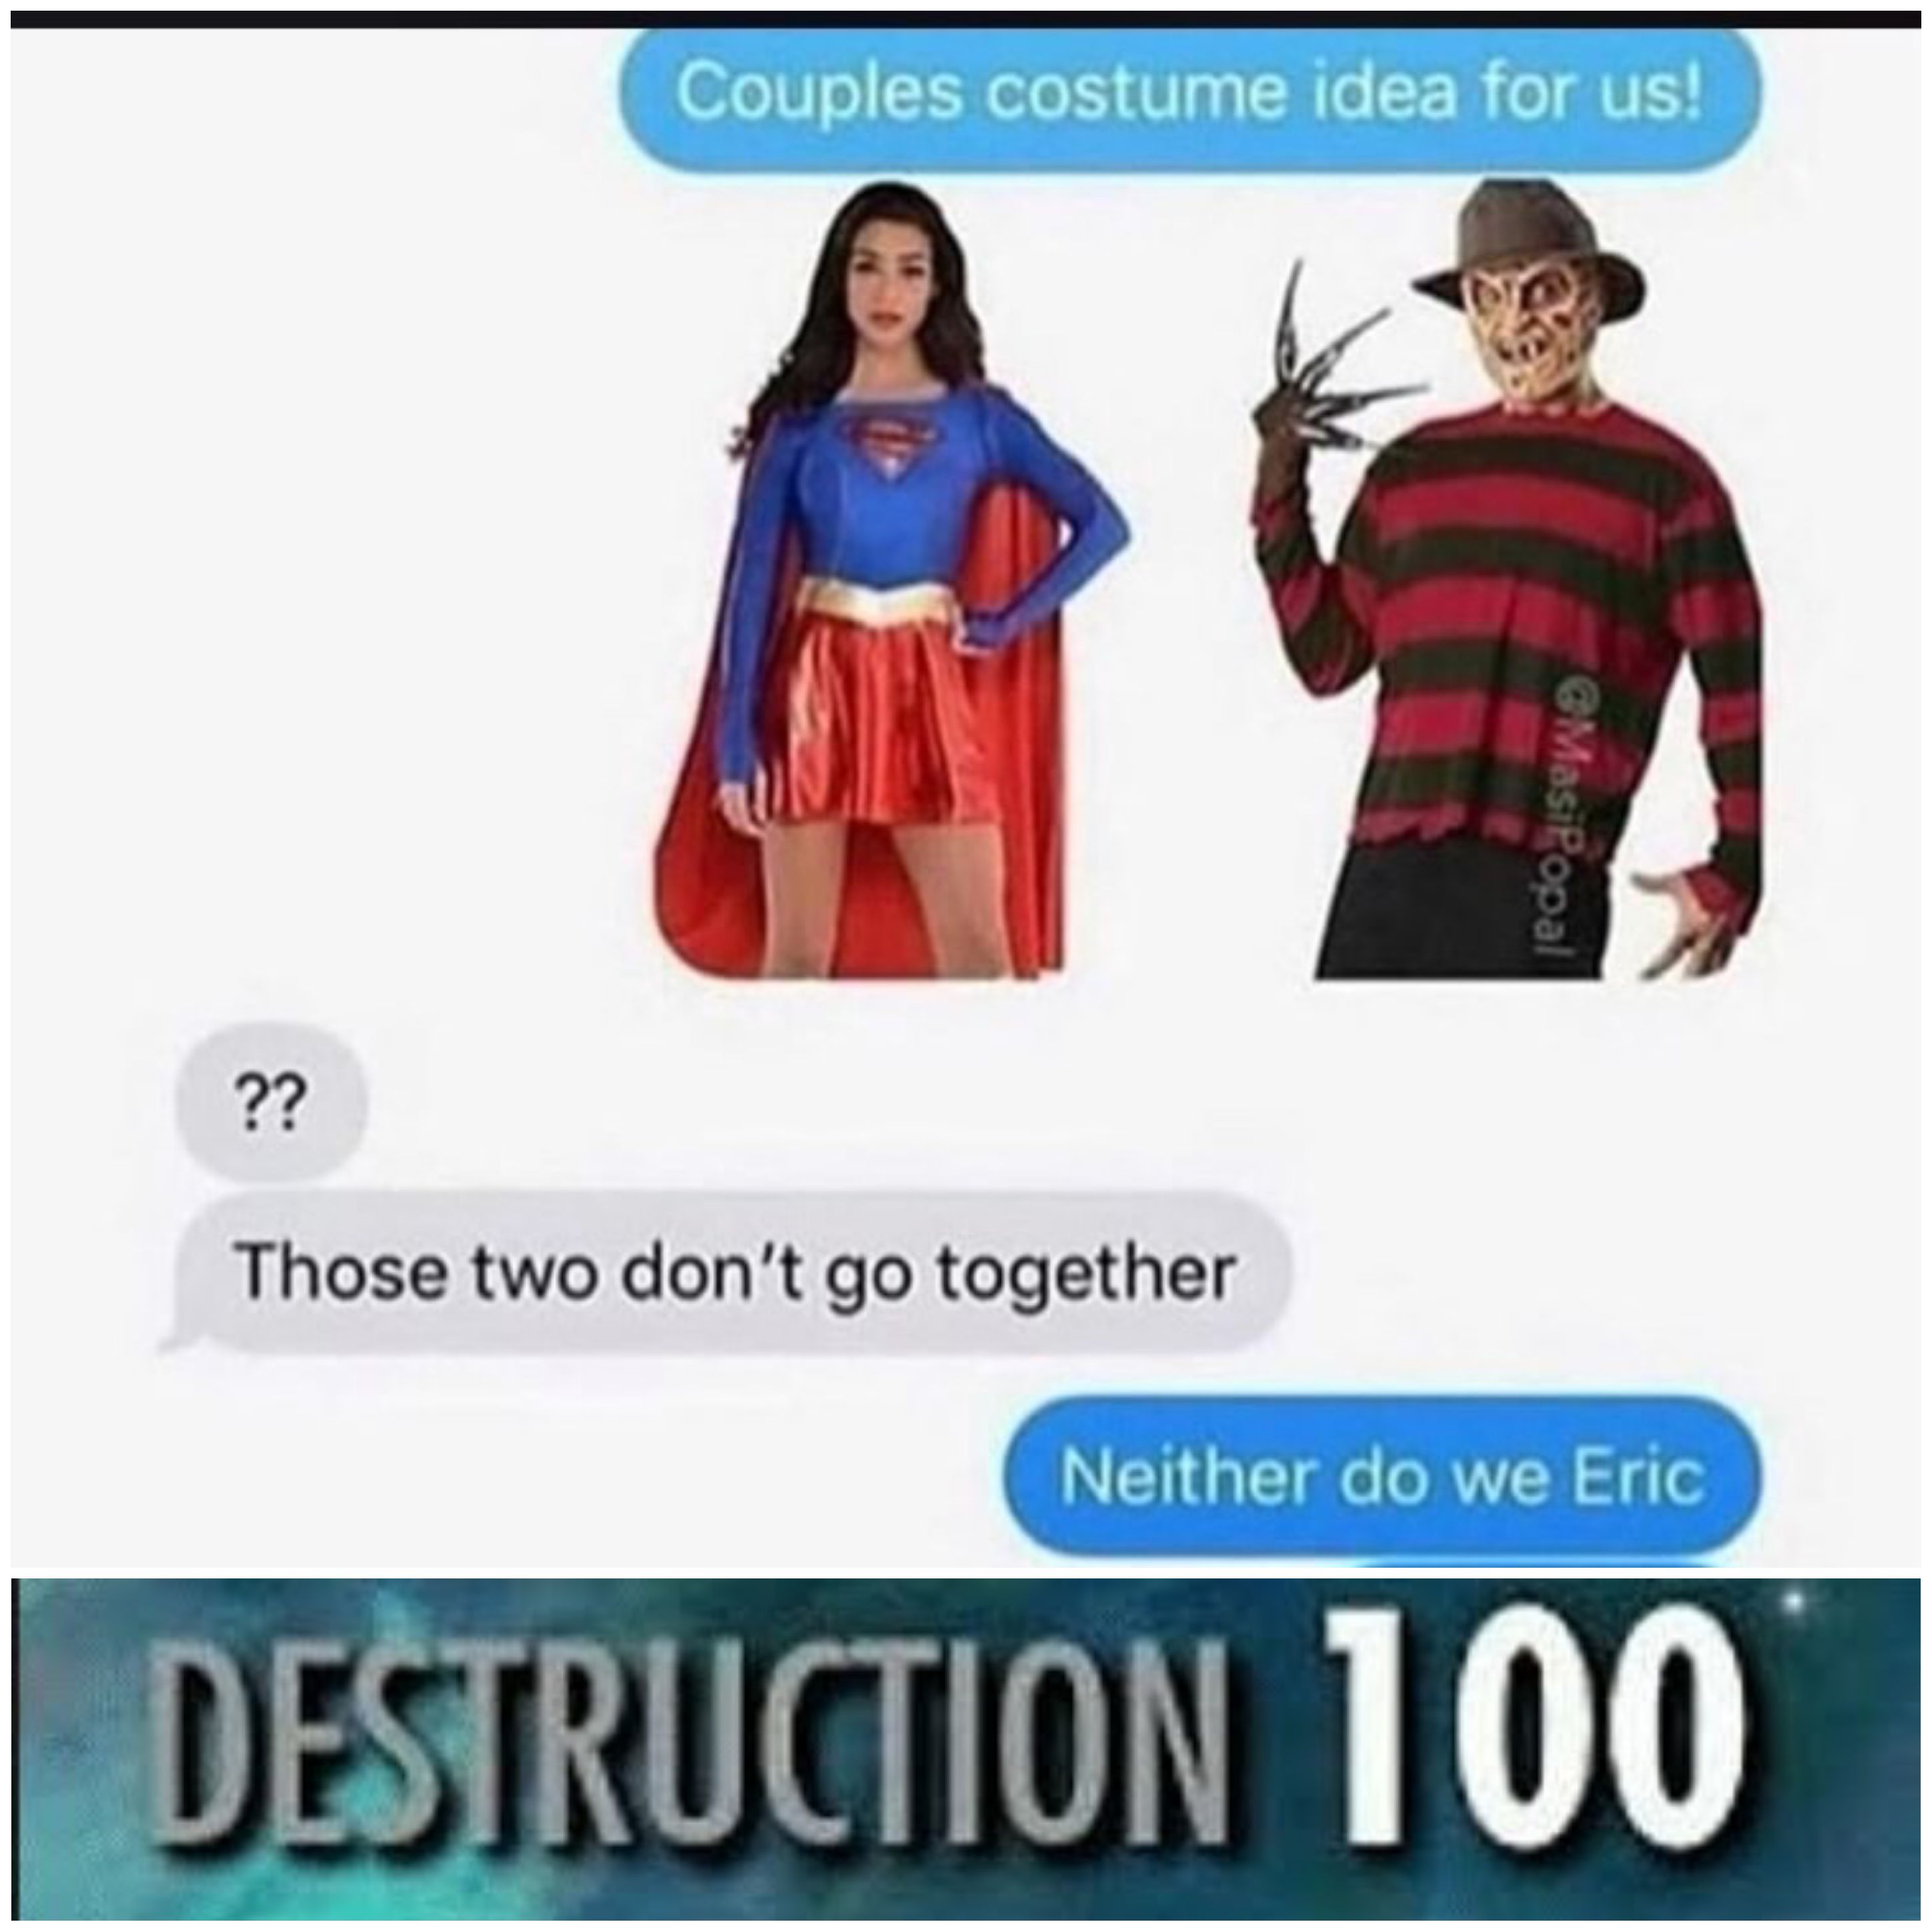 destruction 100 memes - Couples costume idea for us! GMasipopal Those two don't go together Neither do we Eric Destruction 100